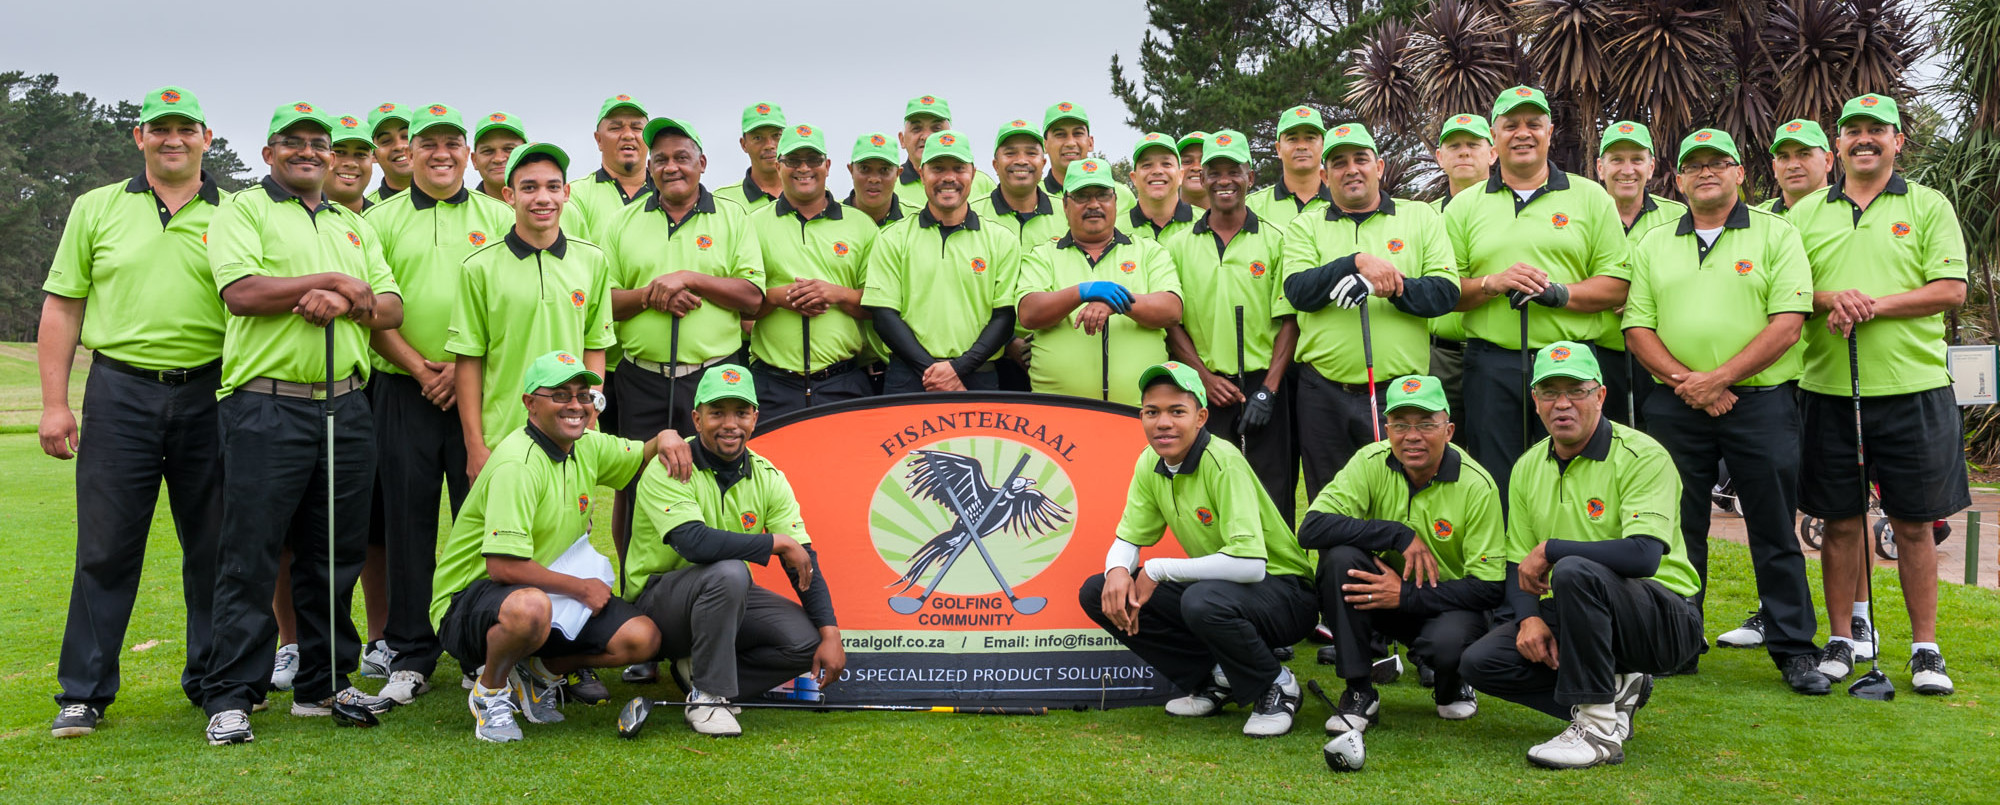 Fisantekraal Golfing Community